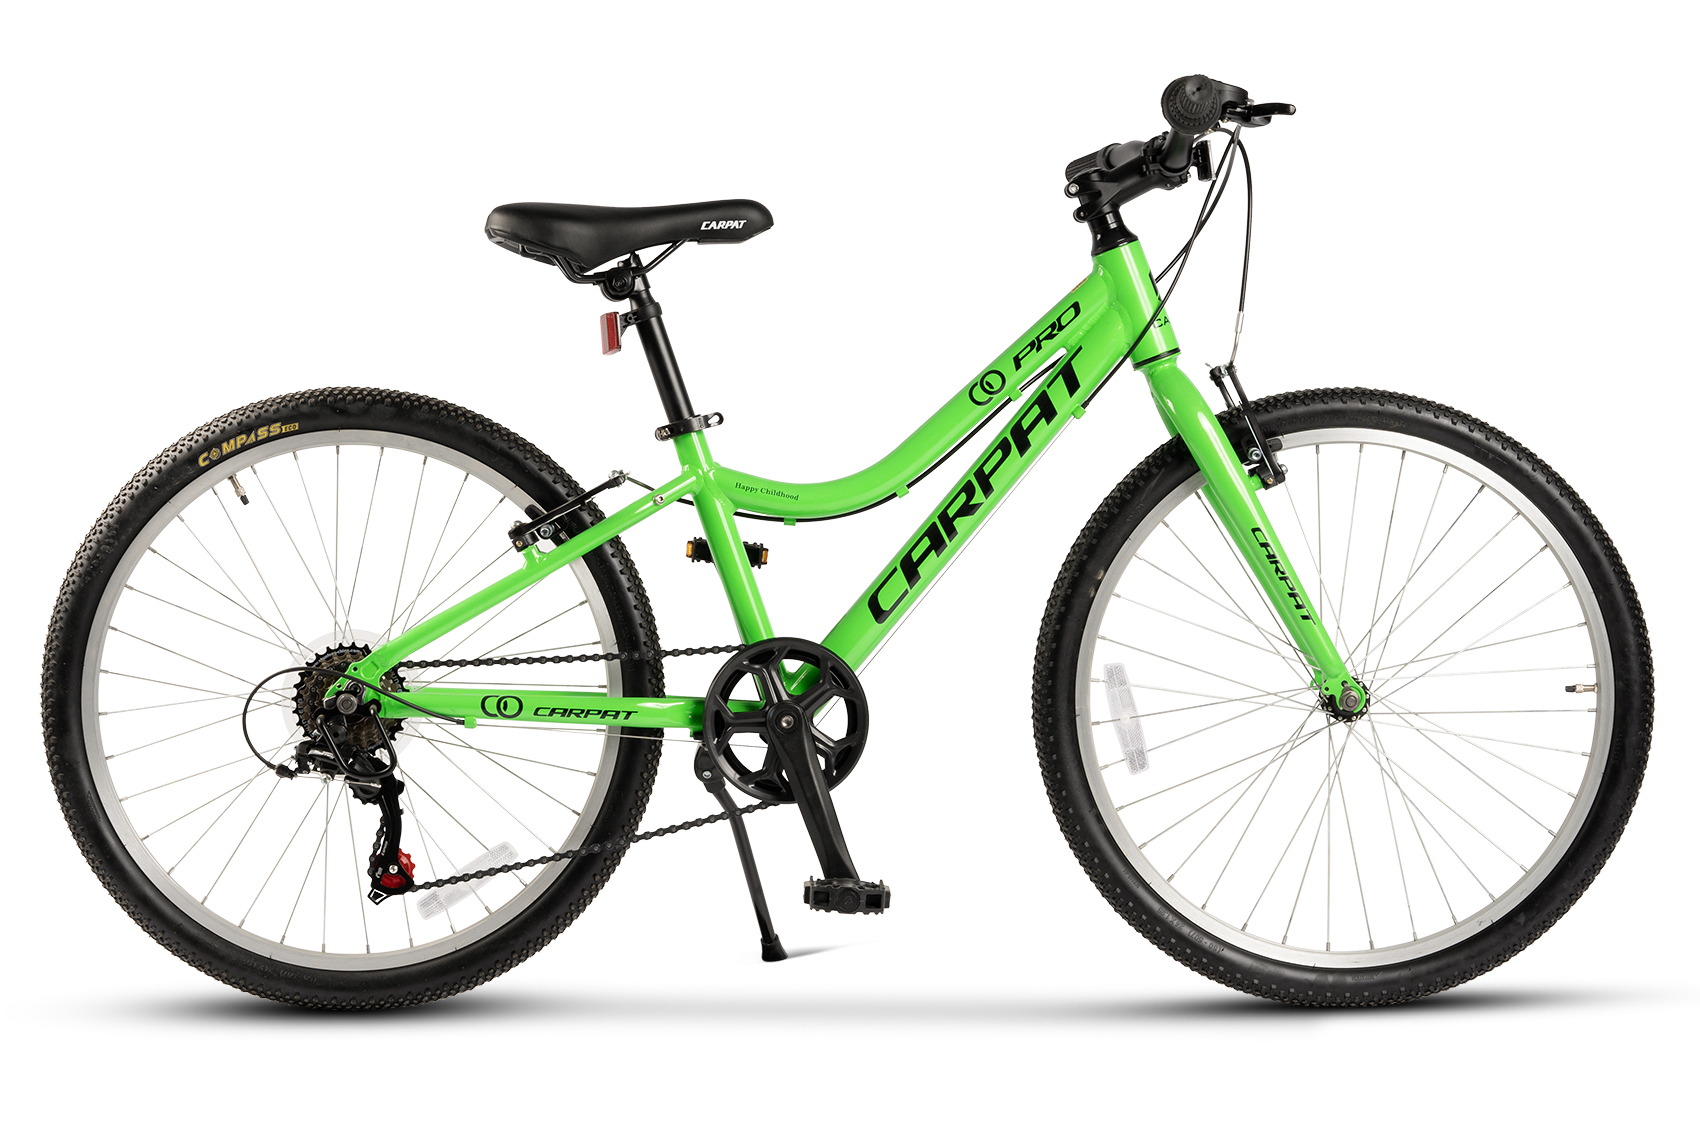 BICICLETE DE MUNTE - ﻿﻿Bicicleta Copii MTB Carpat C24208C, 24", Verde/Negru, https:carpatsport.ro